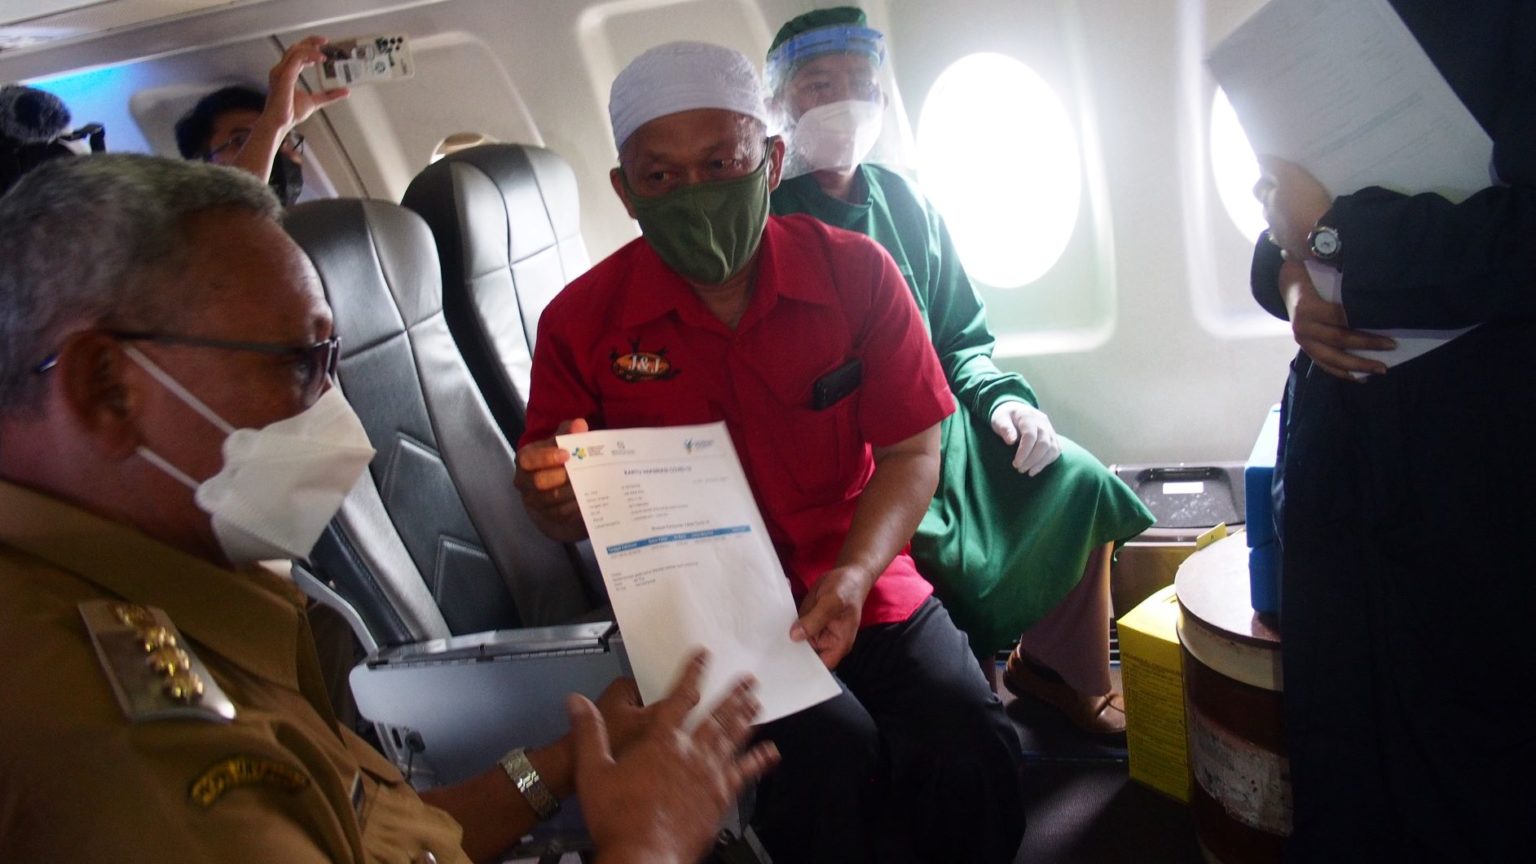 Wow, Warga Kuningan Divaksin di Pesawat Boeing yang “Mendarat” di Linggarjati